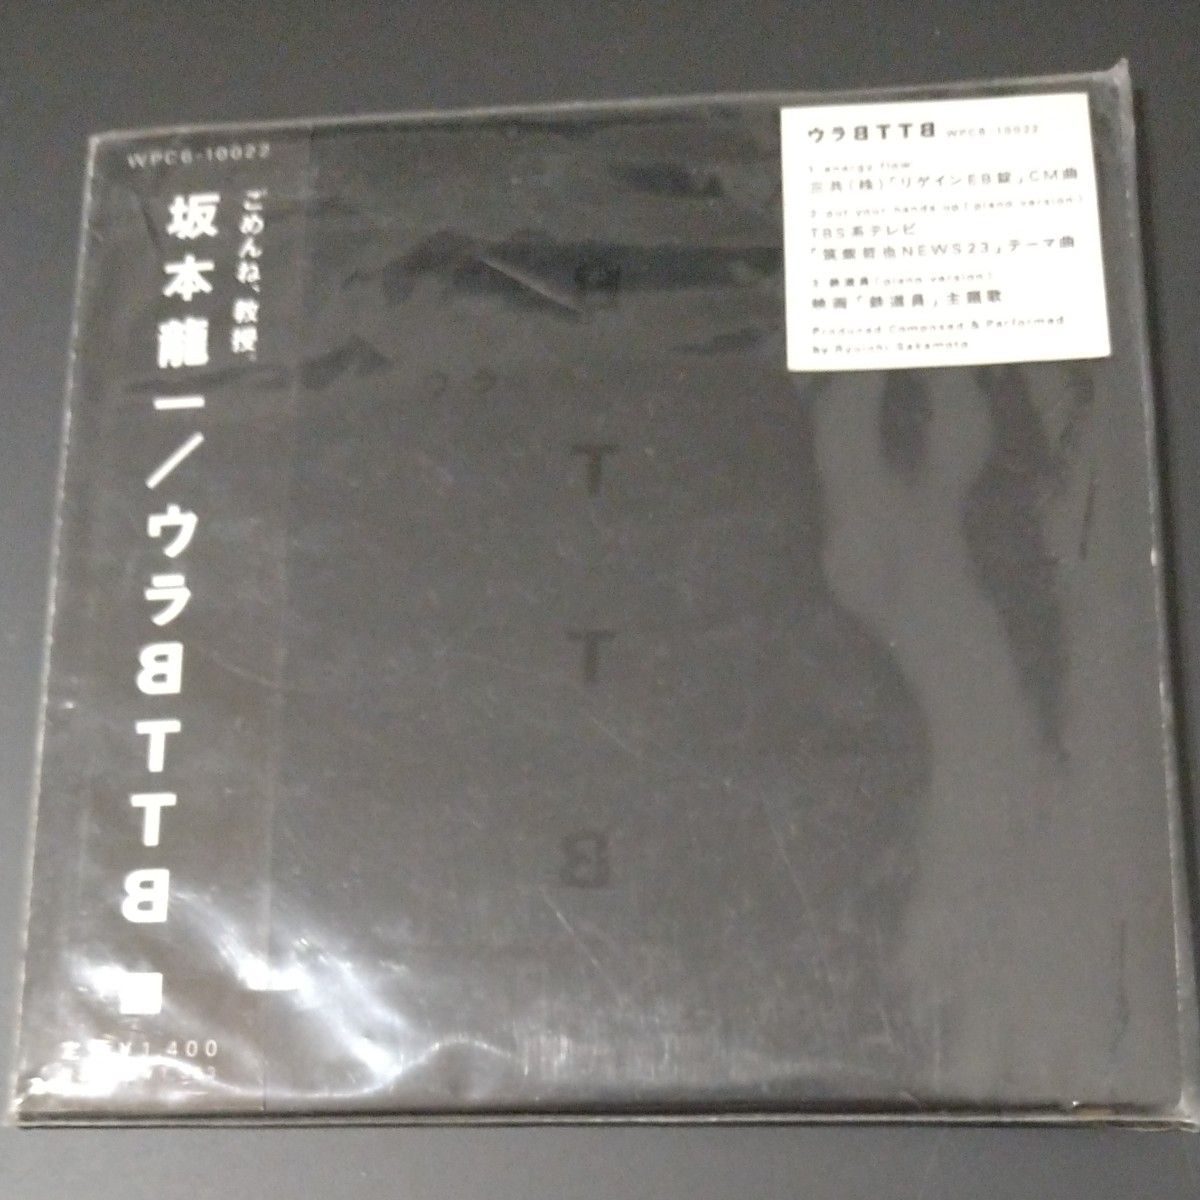 坂本龍一　ウラＢＴＴＢ CD  wpcs-10010